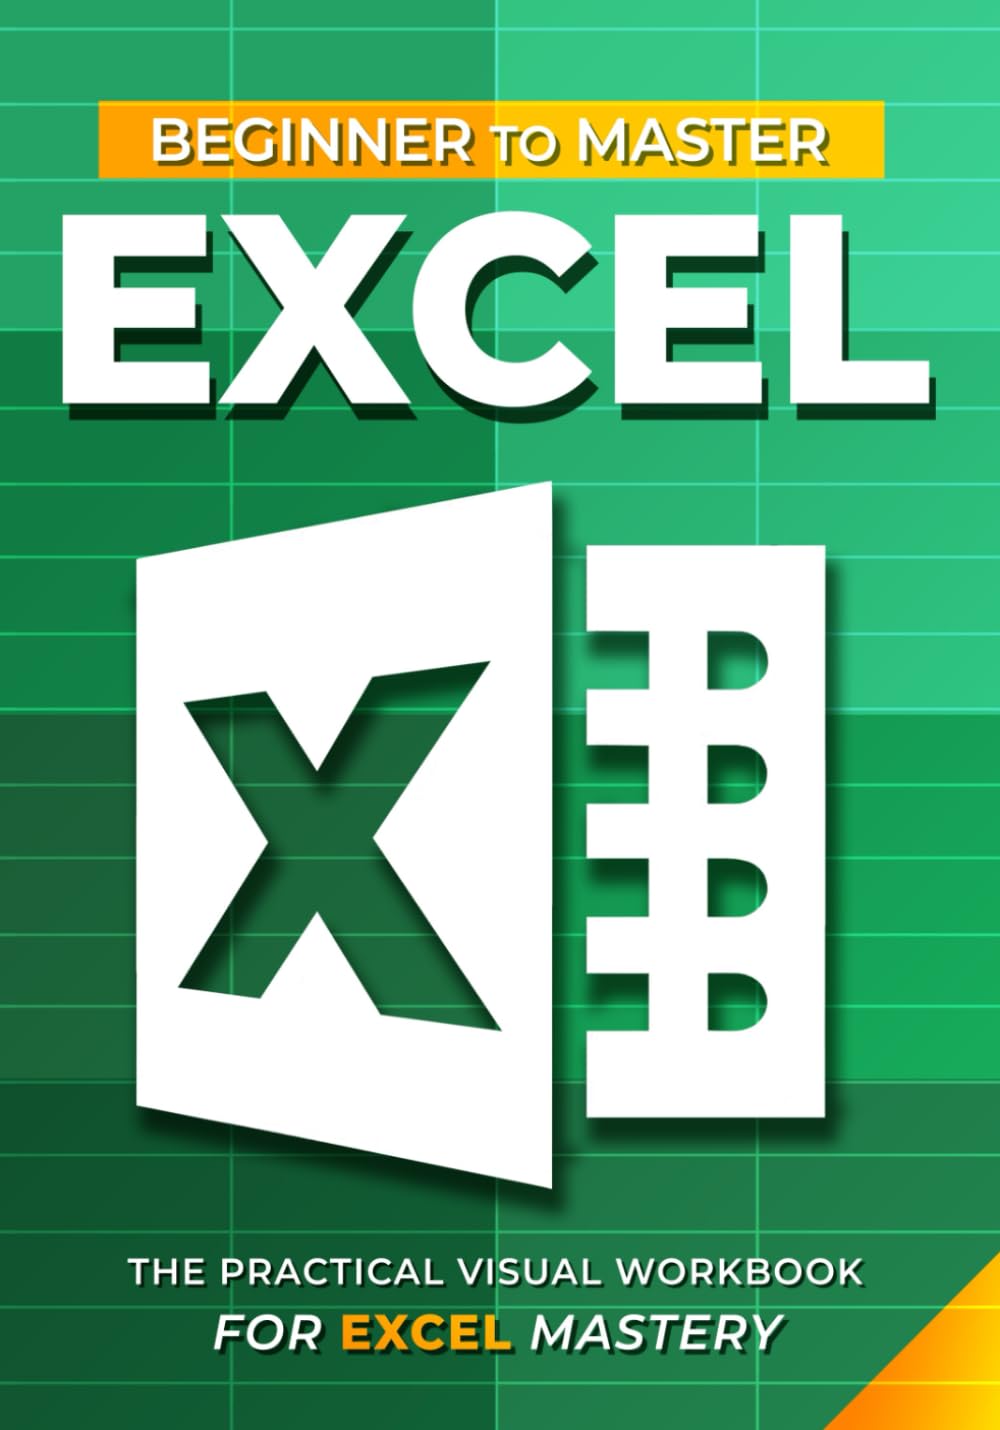 Excel Mastery Workbook